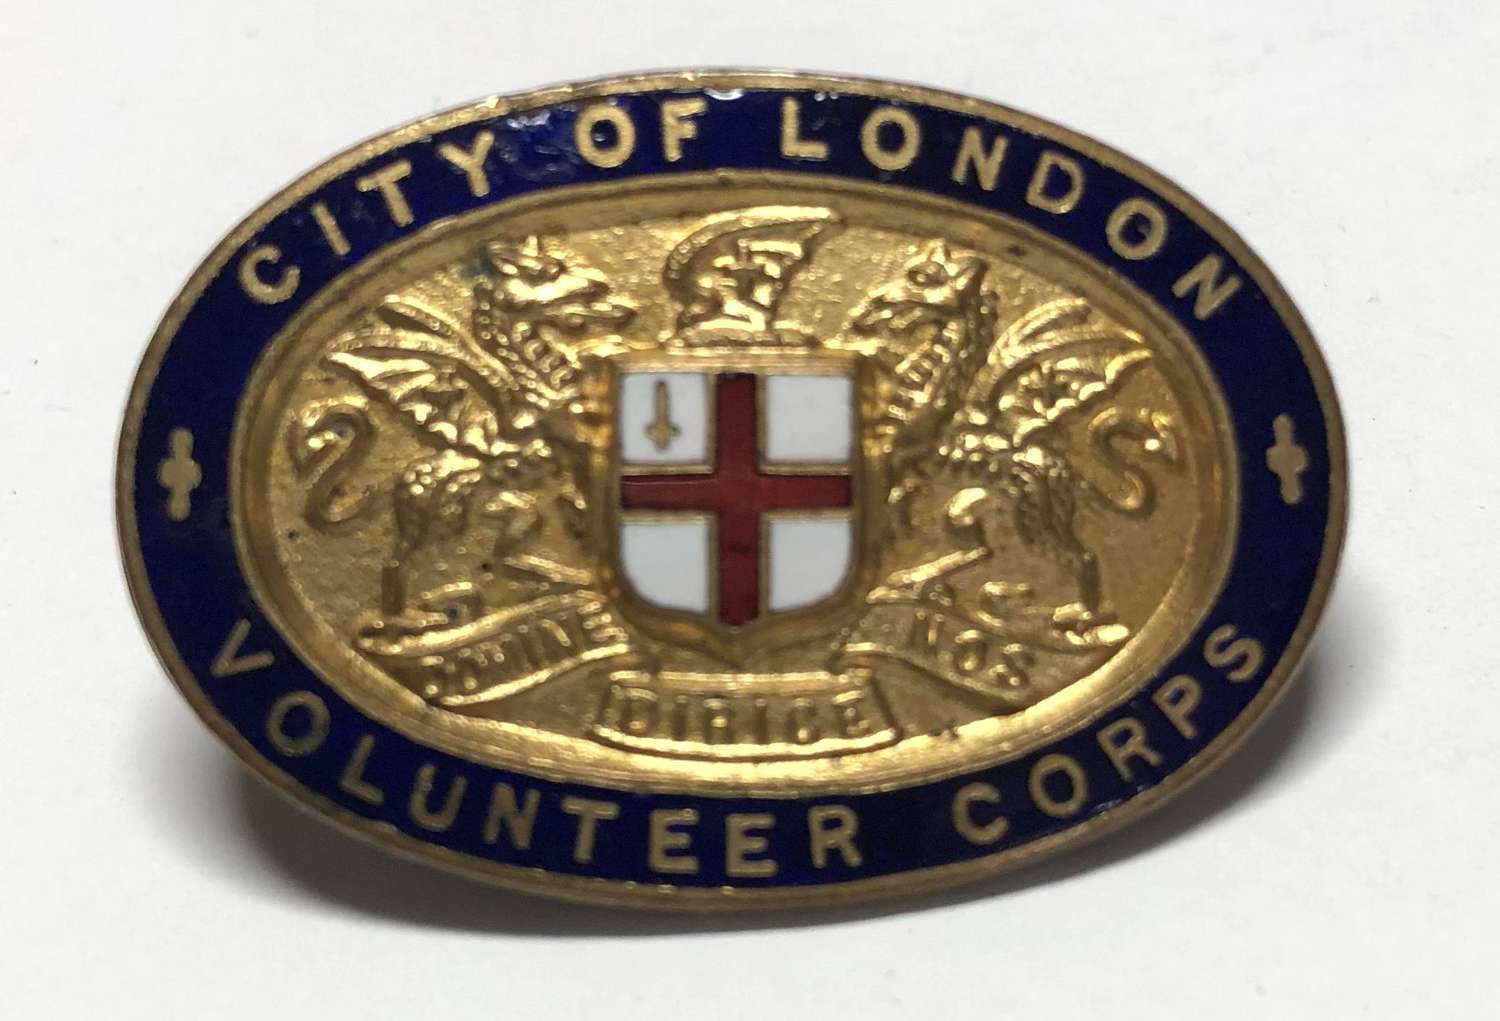 City of London Volunteer Corps WW1 VTC lapel badge